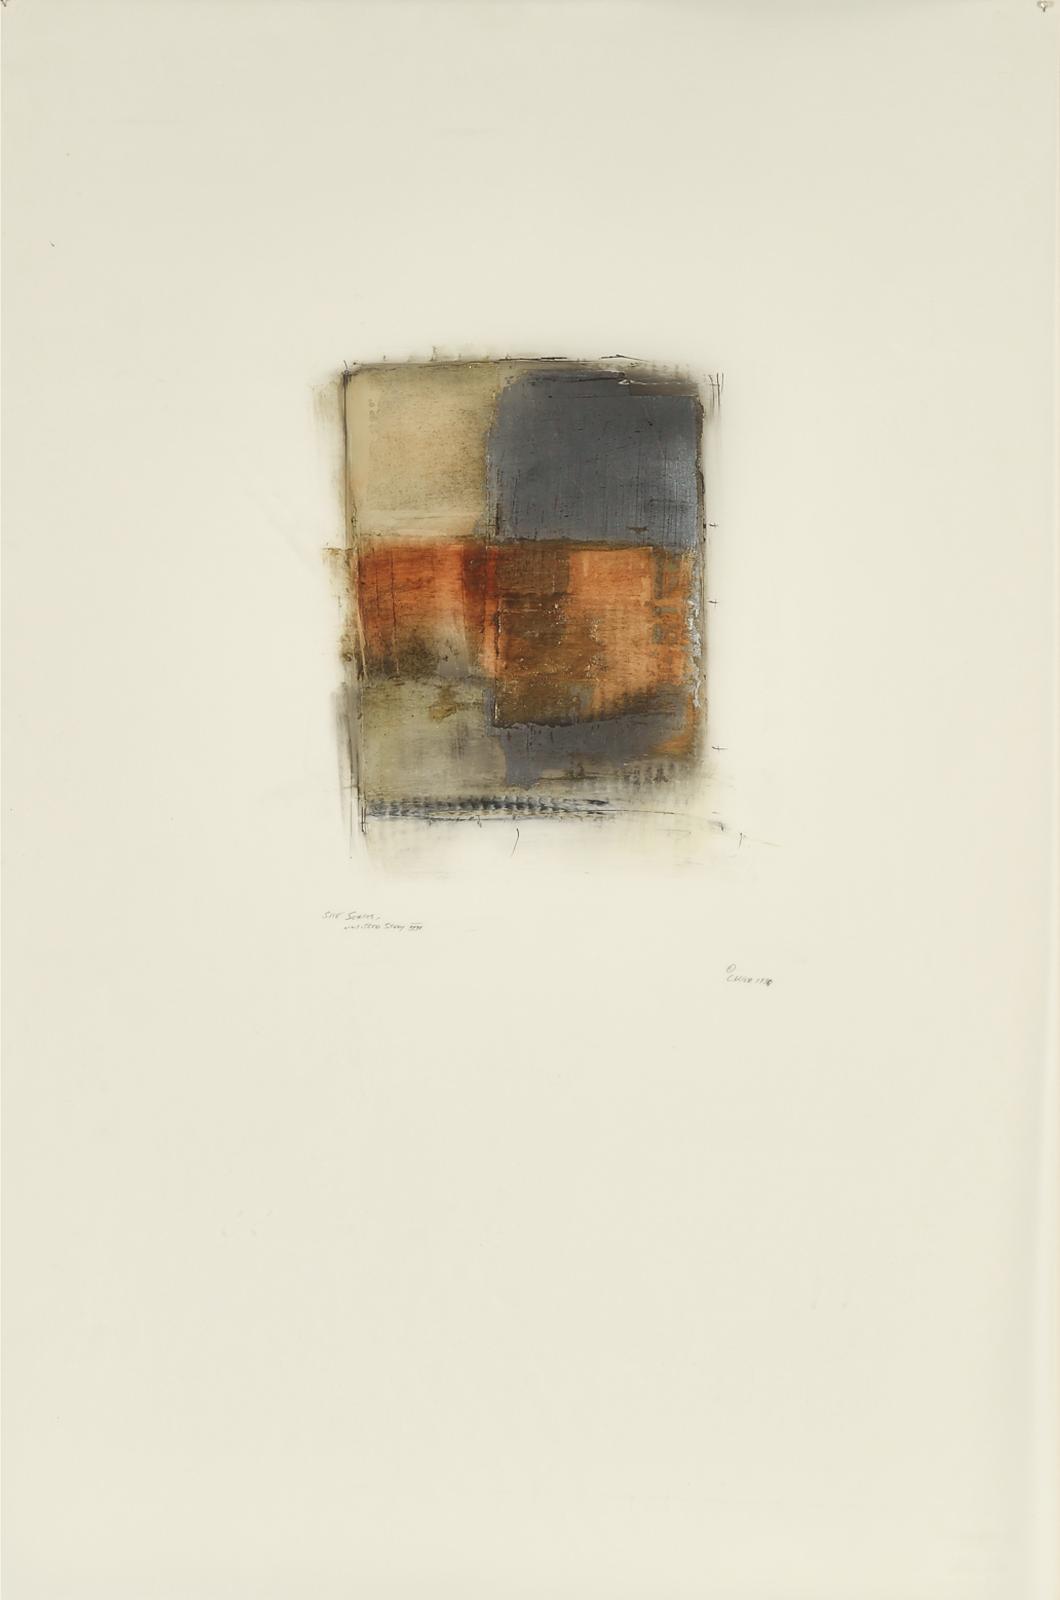 Christopher Kier (1959) - Site Series Iii, Untitled Study Xxiv